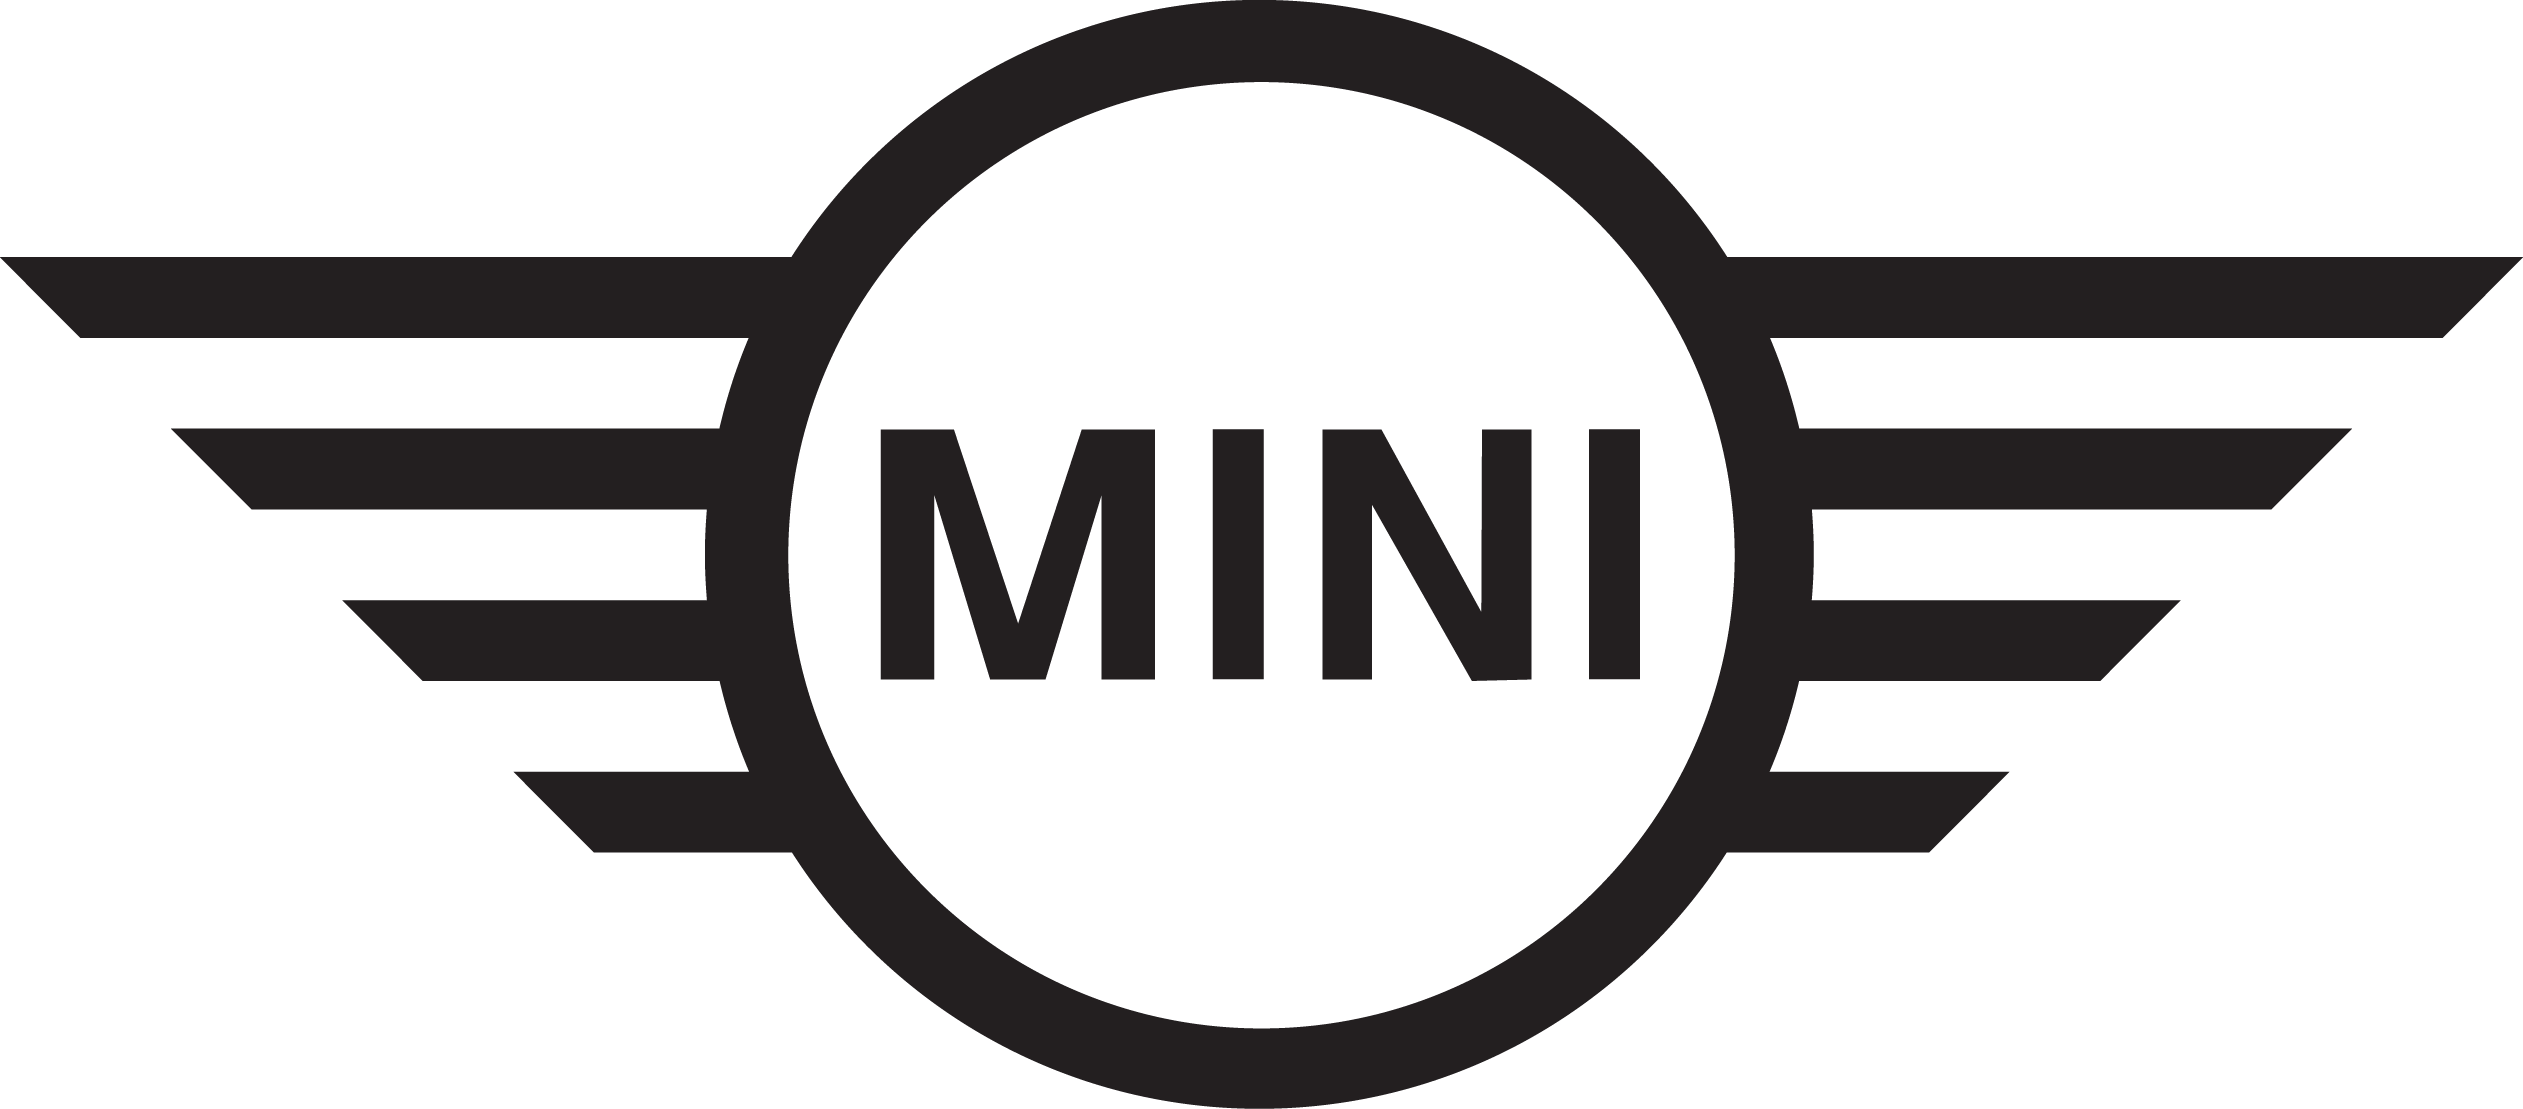 Mini manufacturer logo